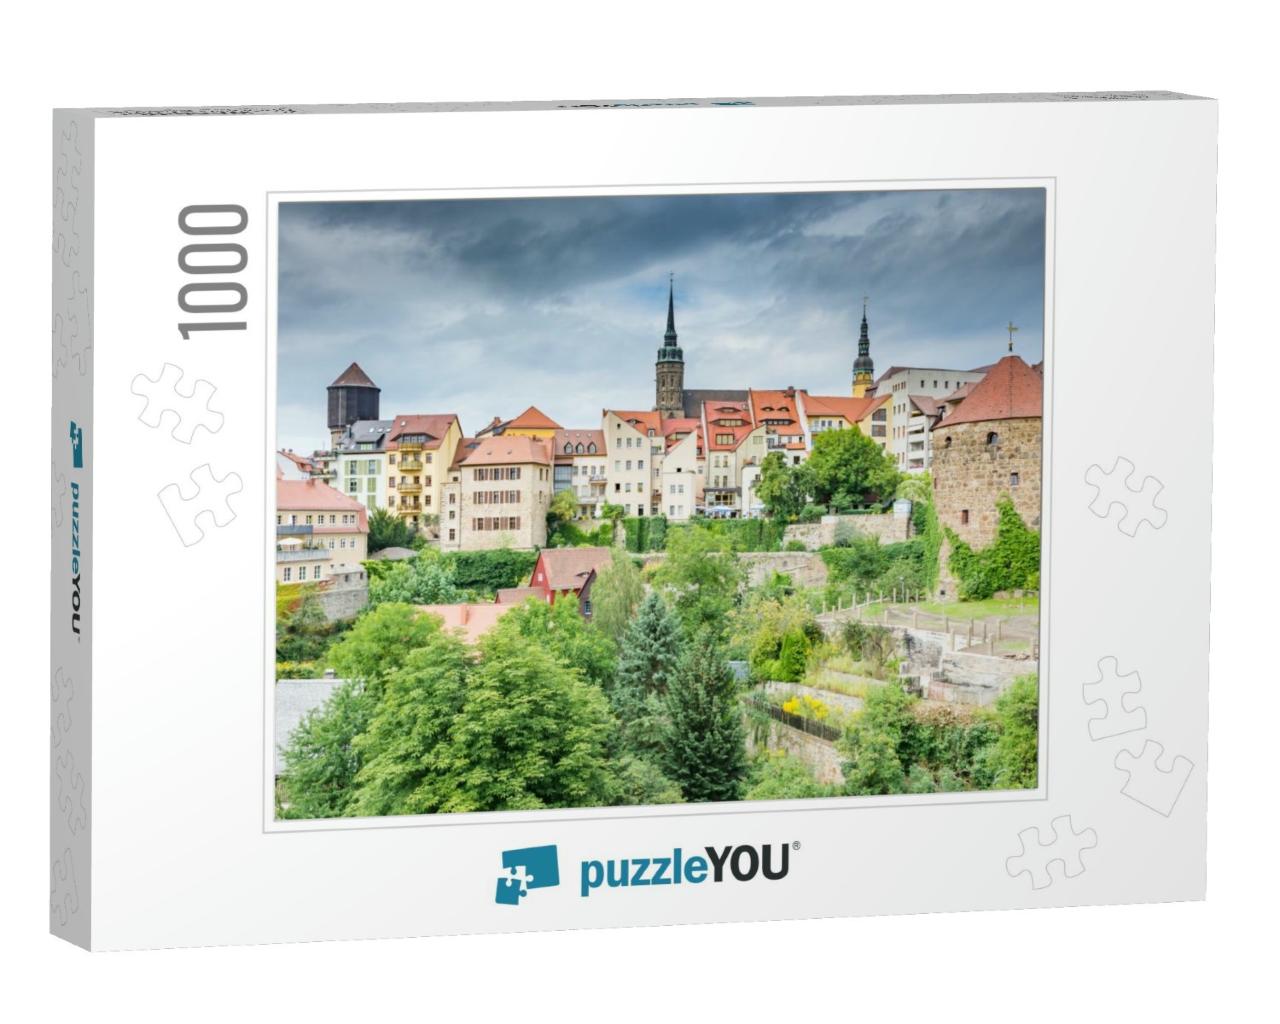 Cityscape of Bautzen Saxony, Germany... Jigsaw Puzzle with 1000 pieces